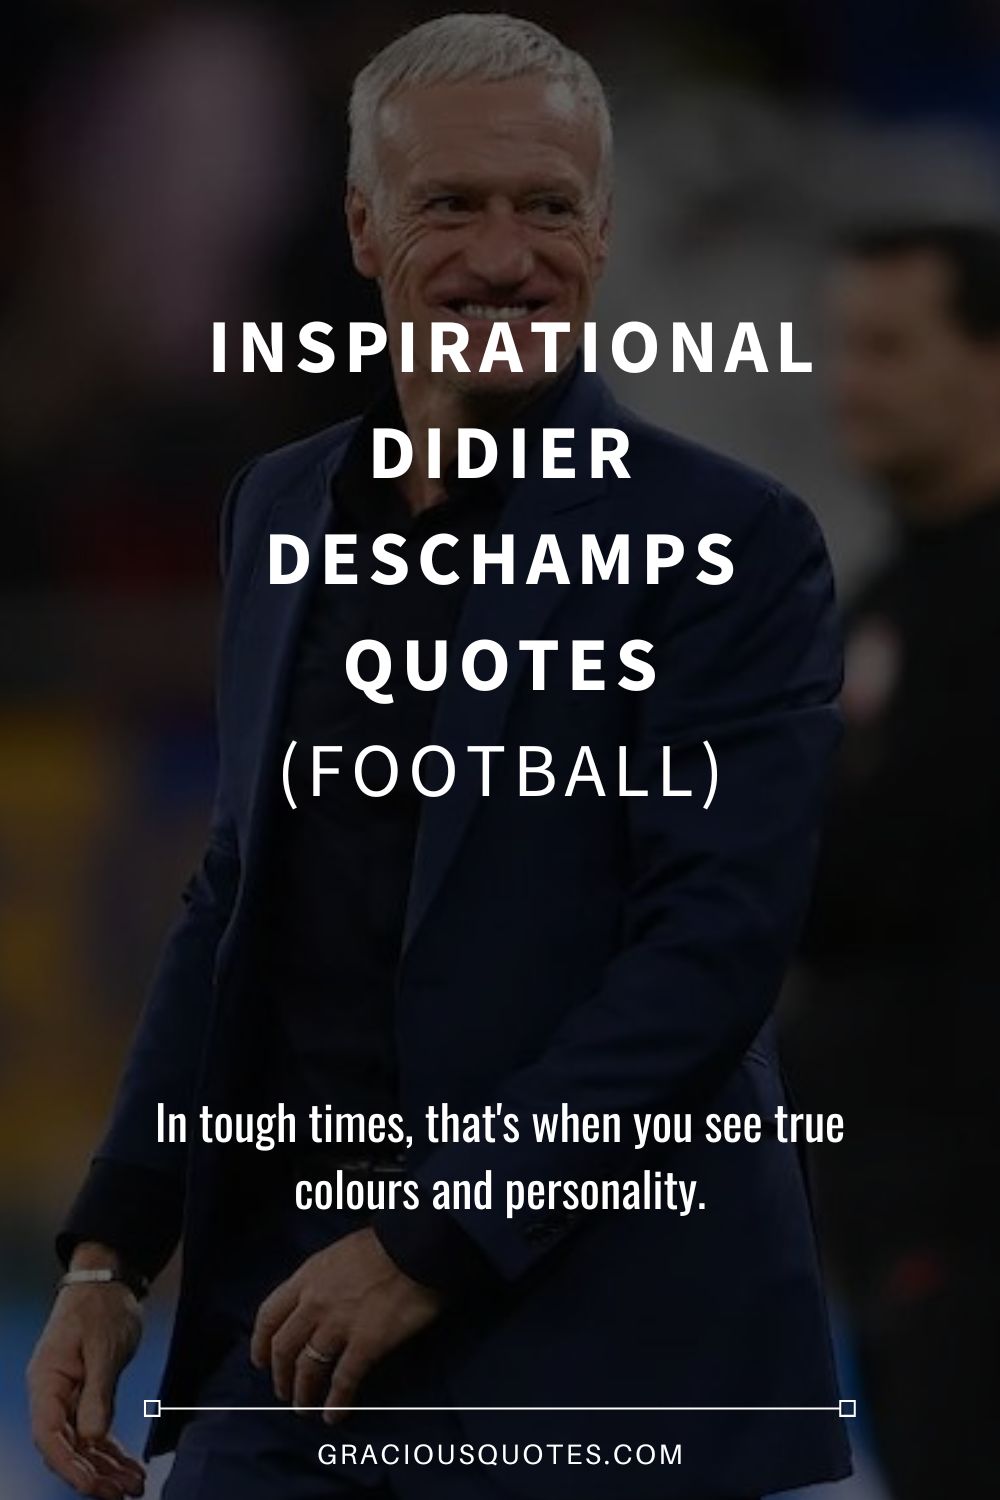 Inspirational Didier Deschamps Quotes (FOOTBALL) - Gracious Quotes